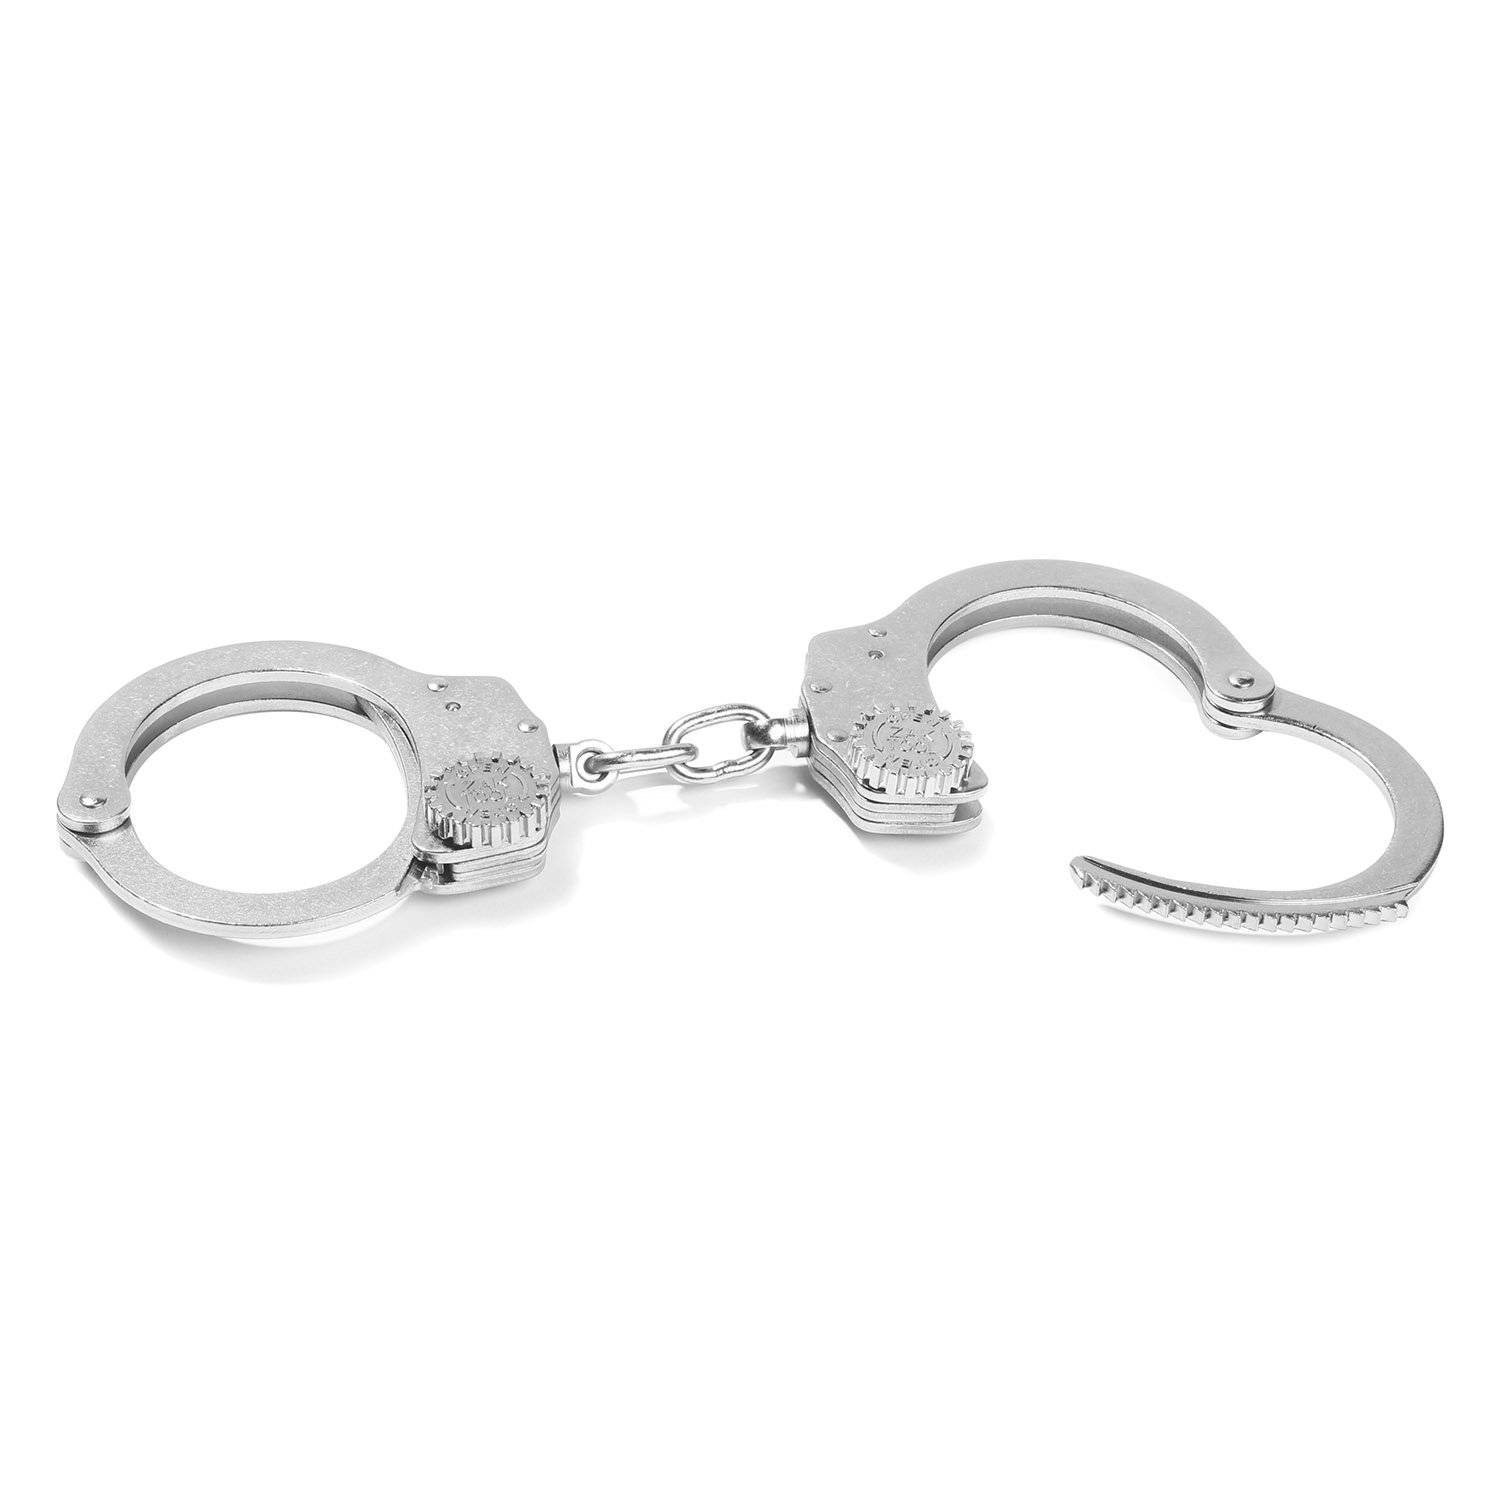 Galls Training Handcuffs